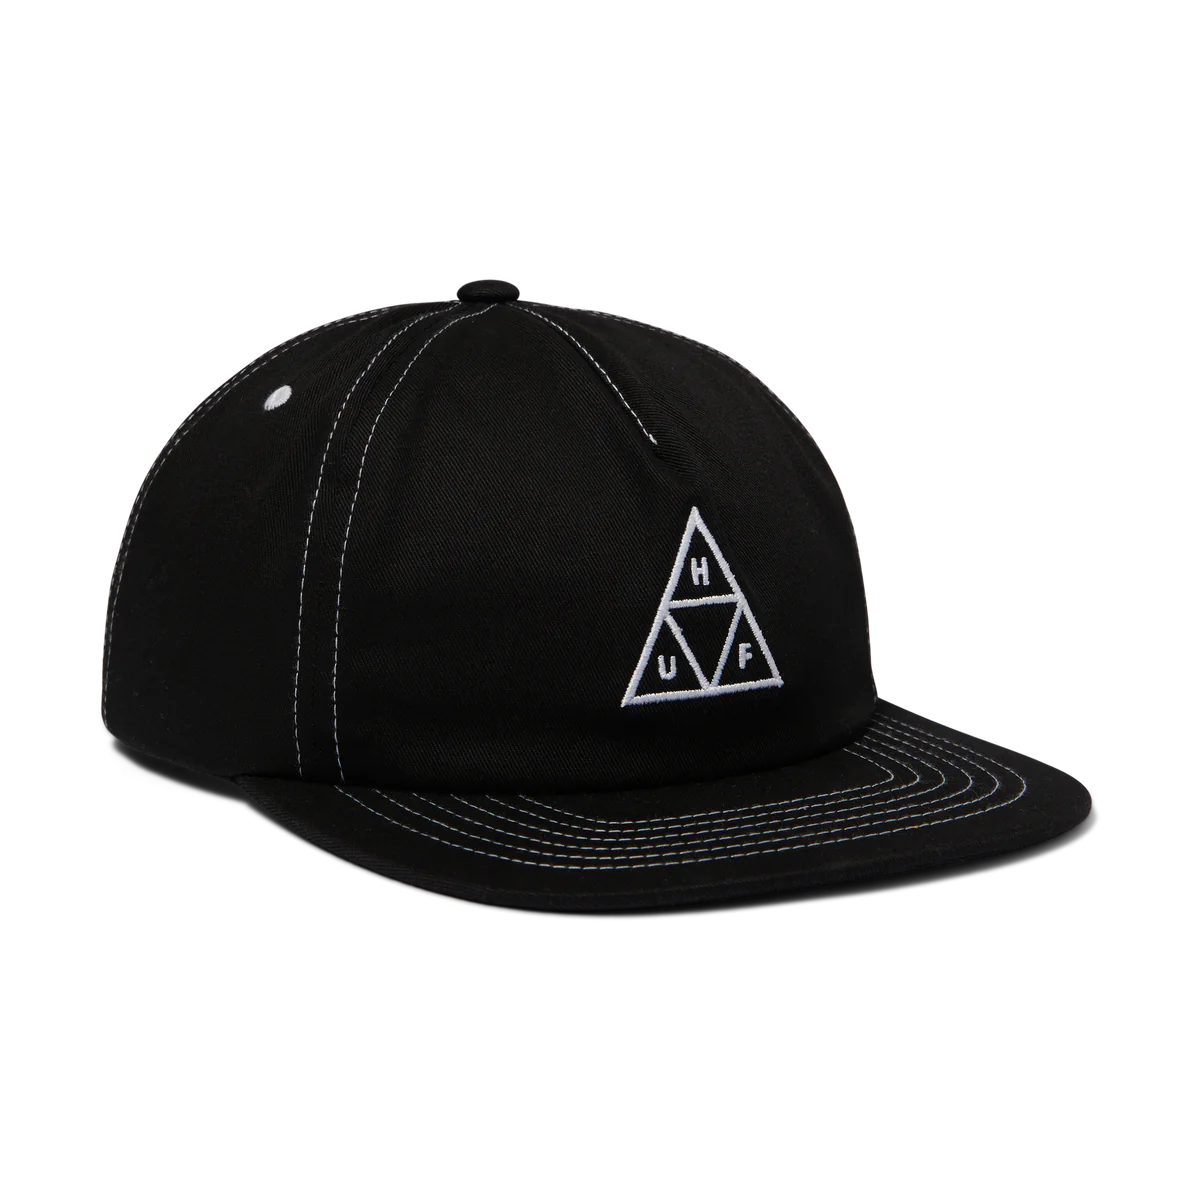 HUF Set Triple Triangle Snapback Hat Black/White Men's Hats huf 